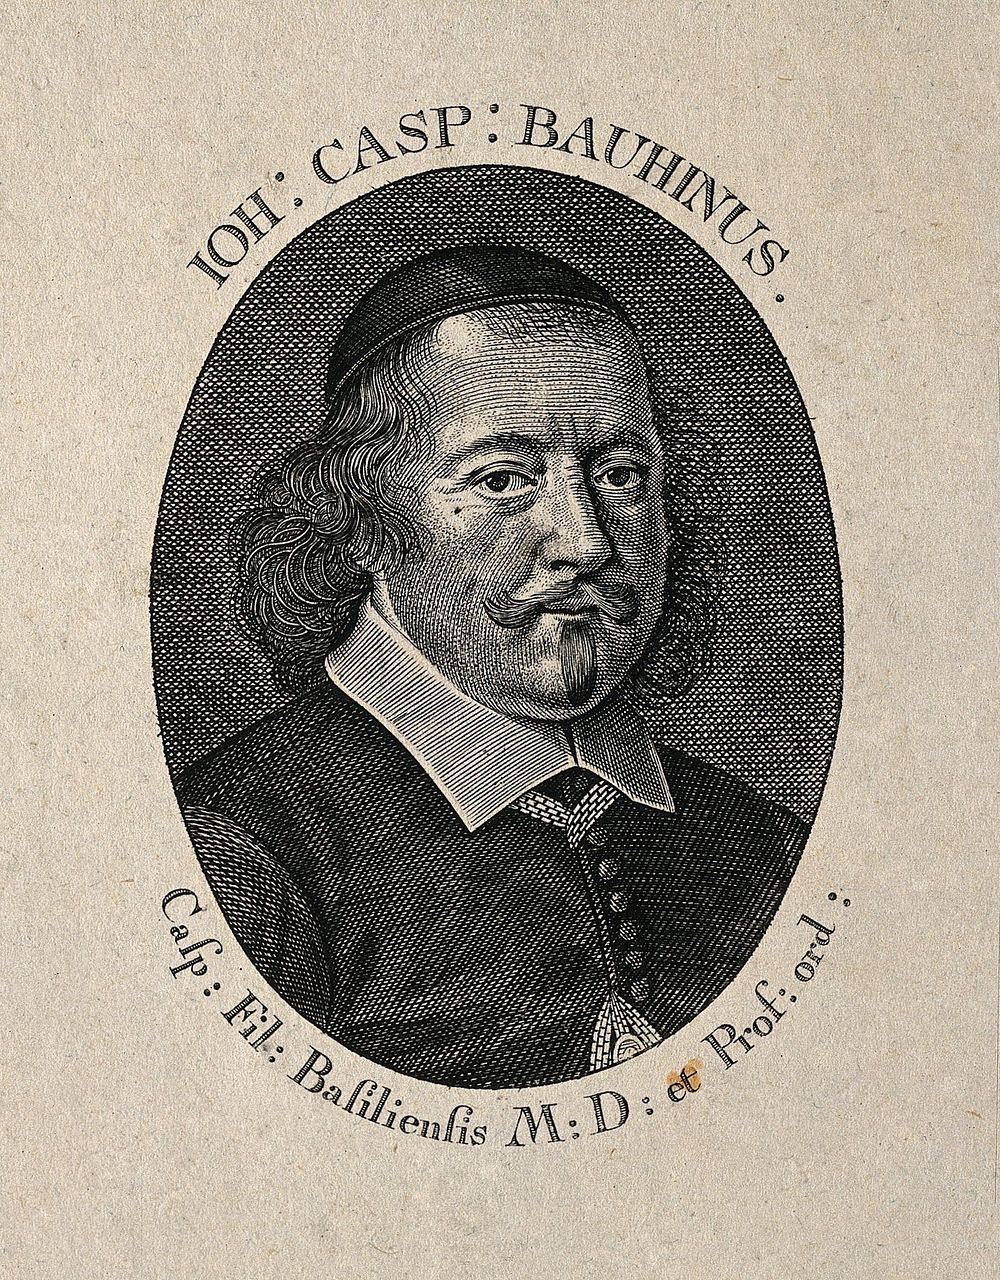 Johann Caspar Bauhin. Line engraving.